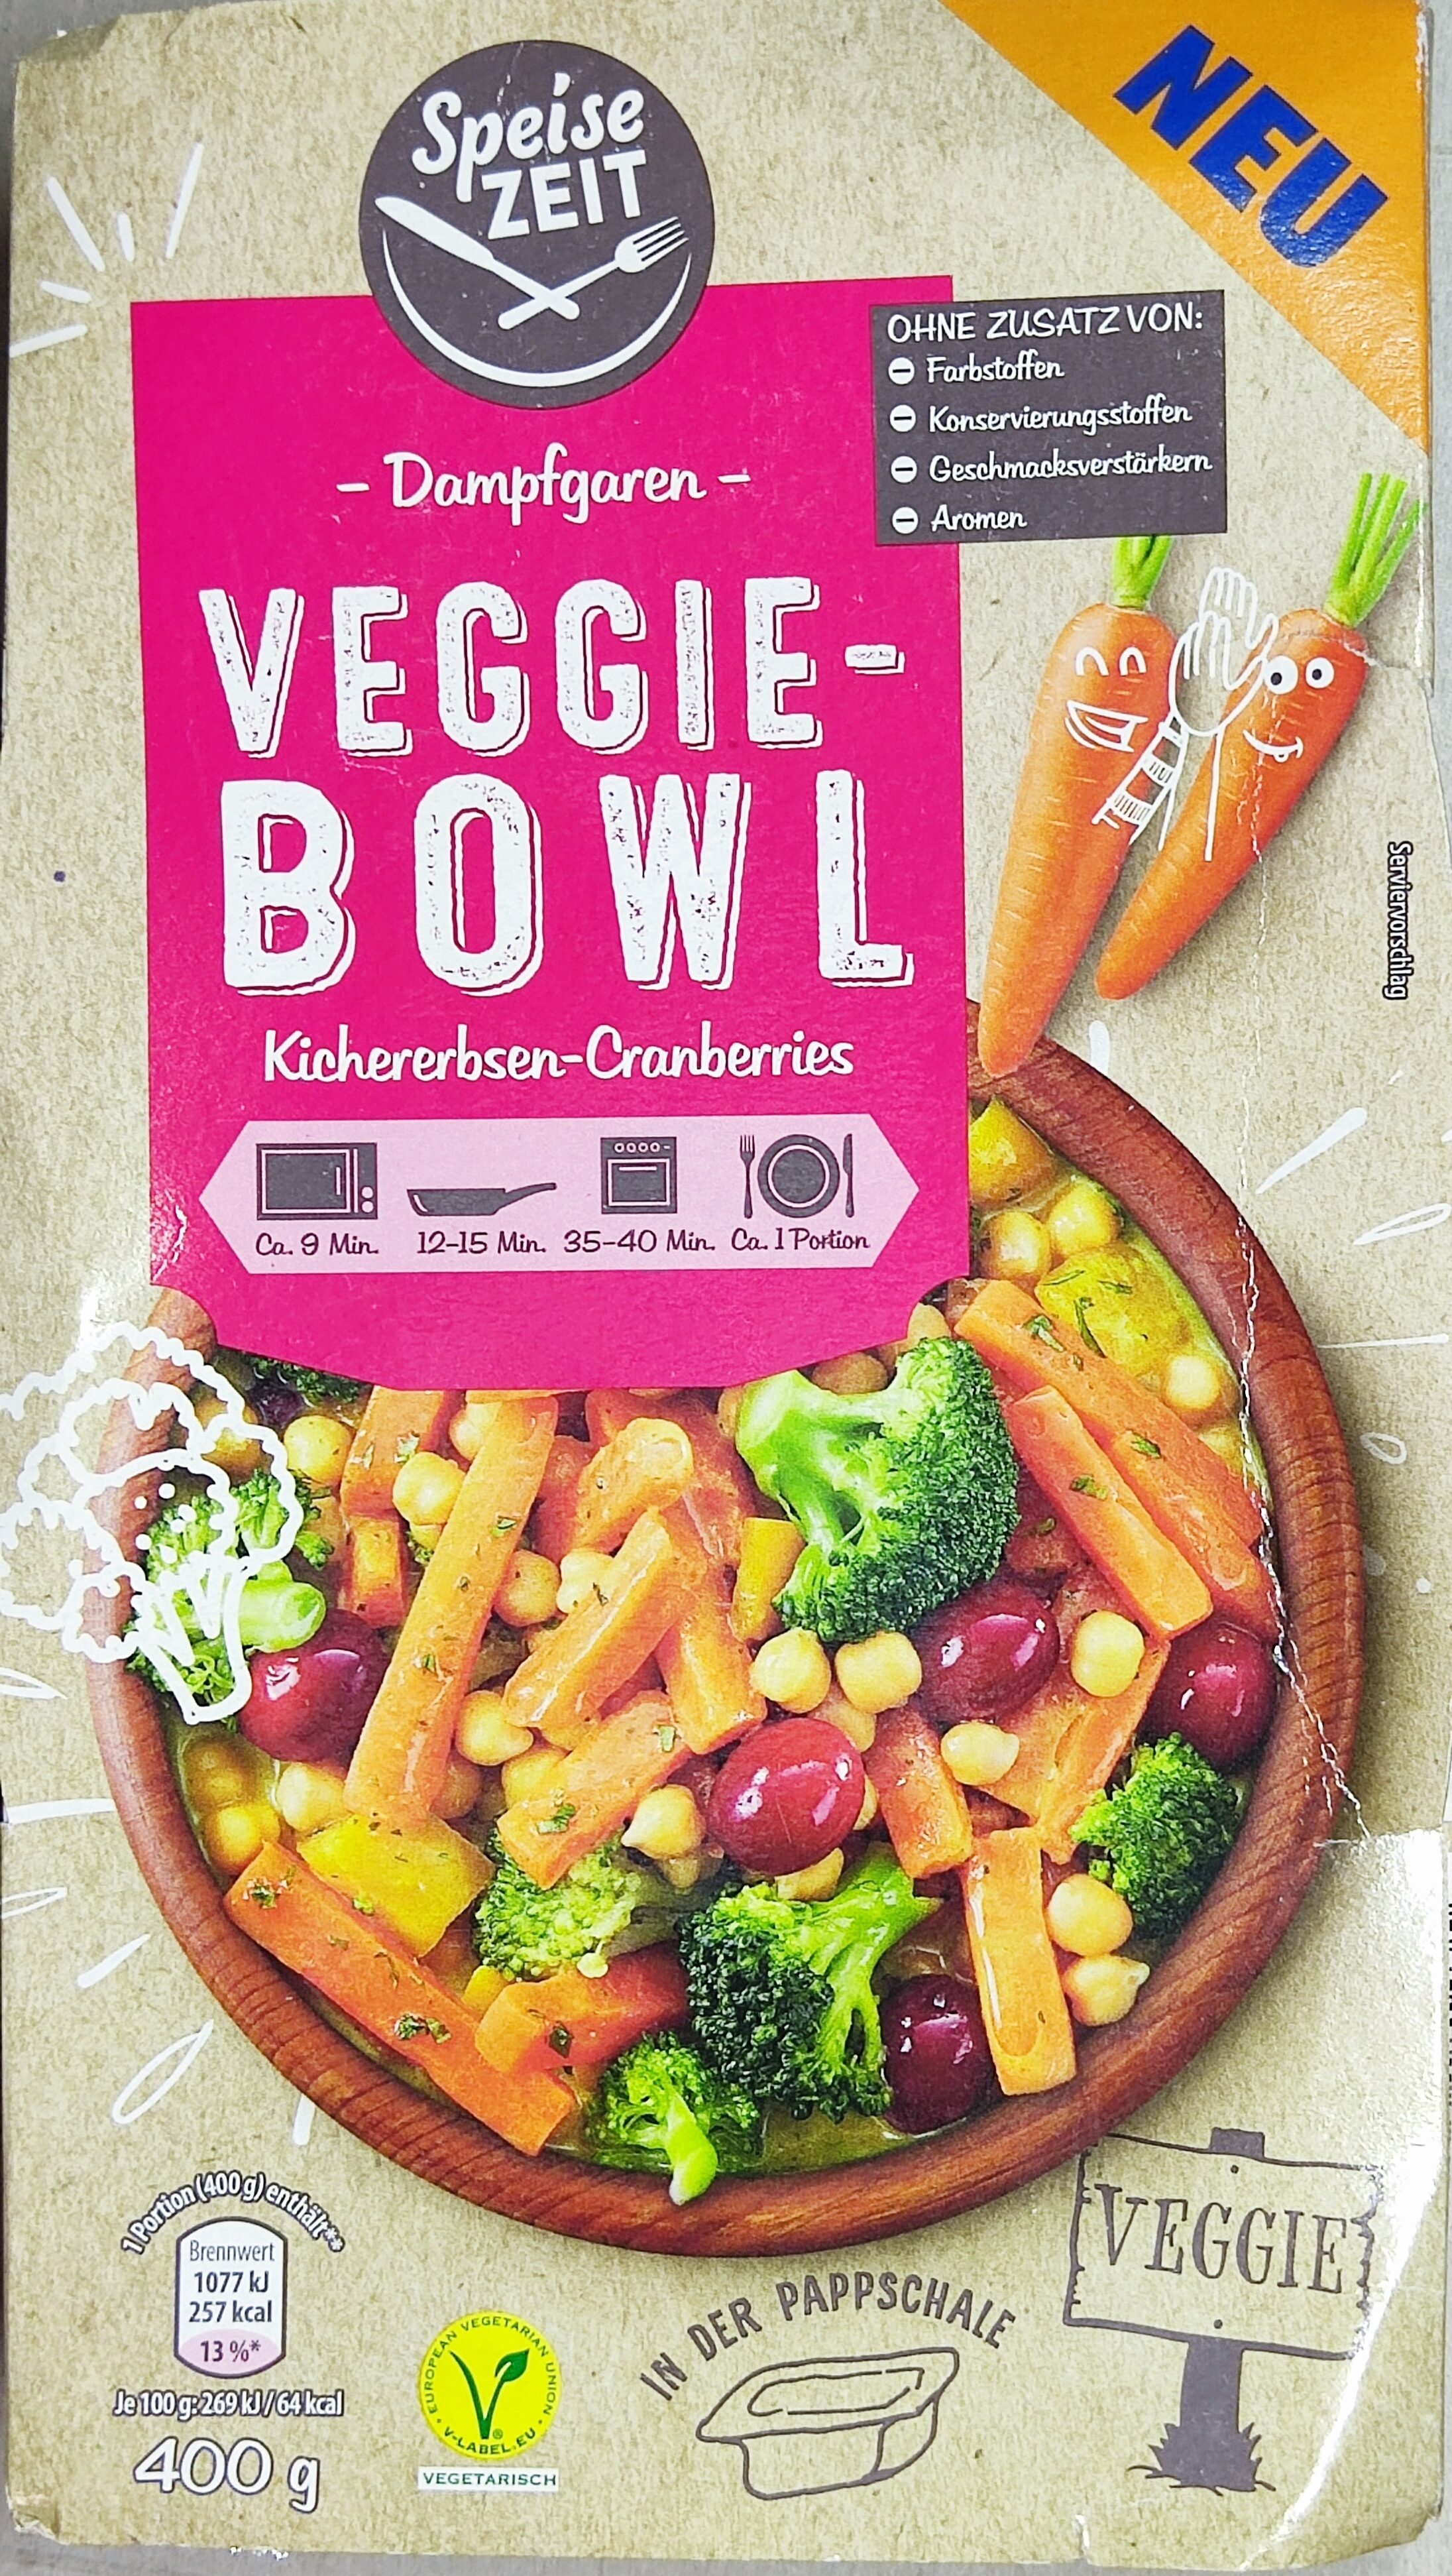 Veggie-Bowl - Kichererbsen-Cranberries - Produkt